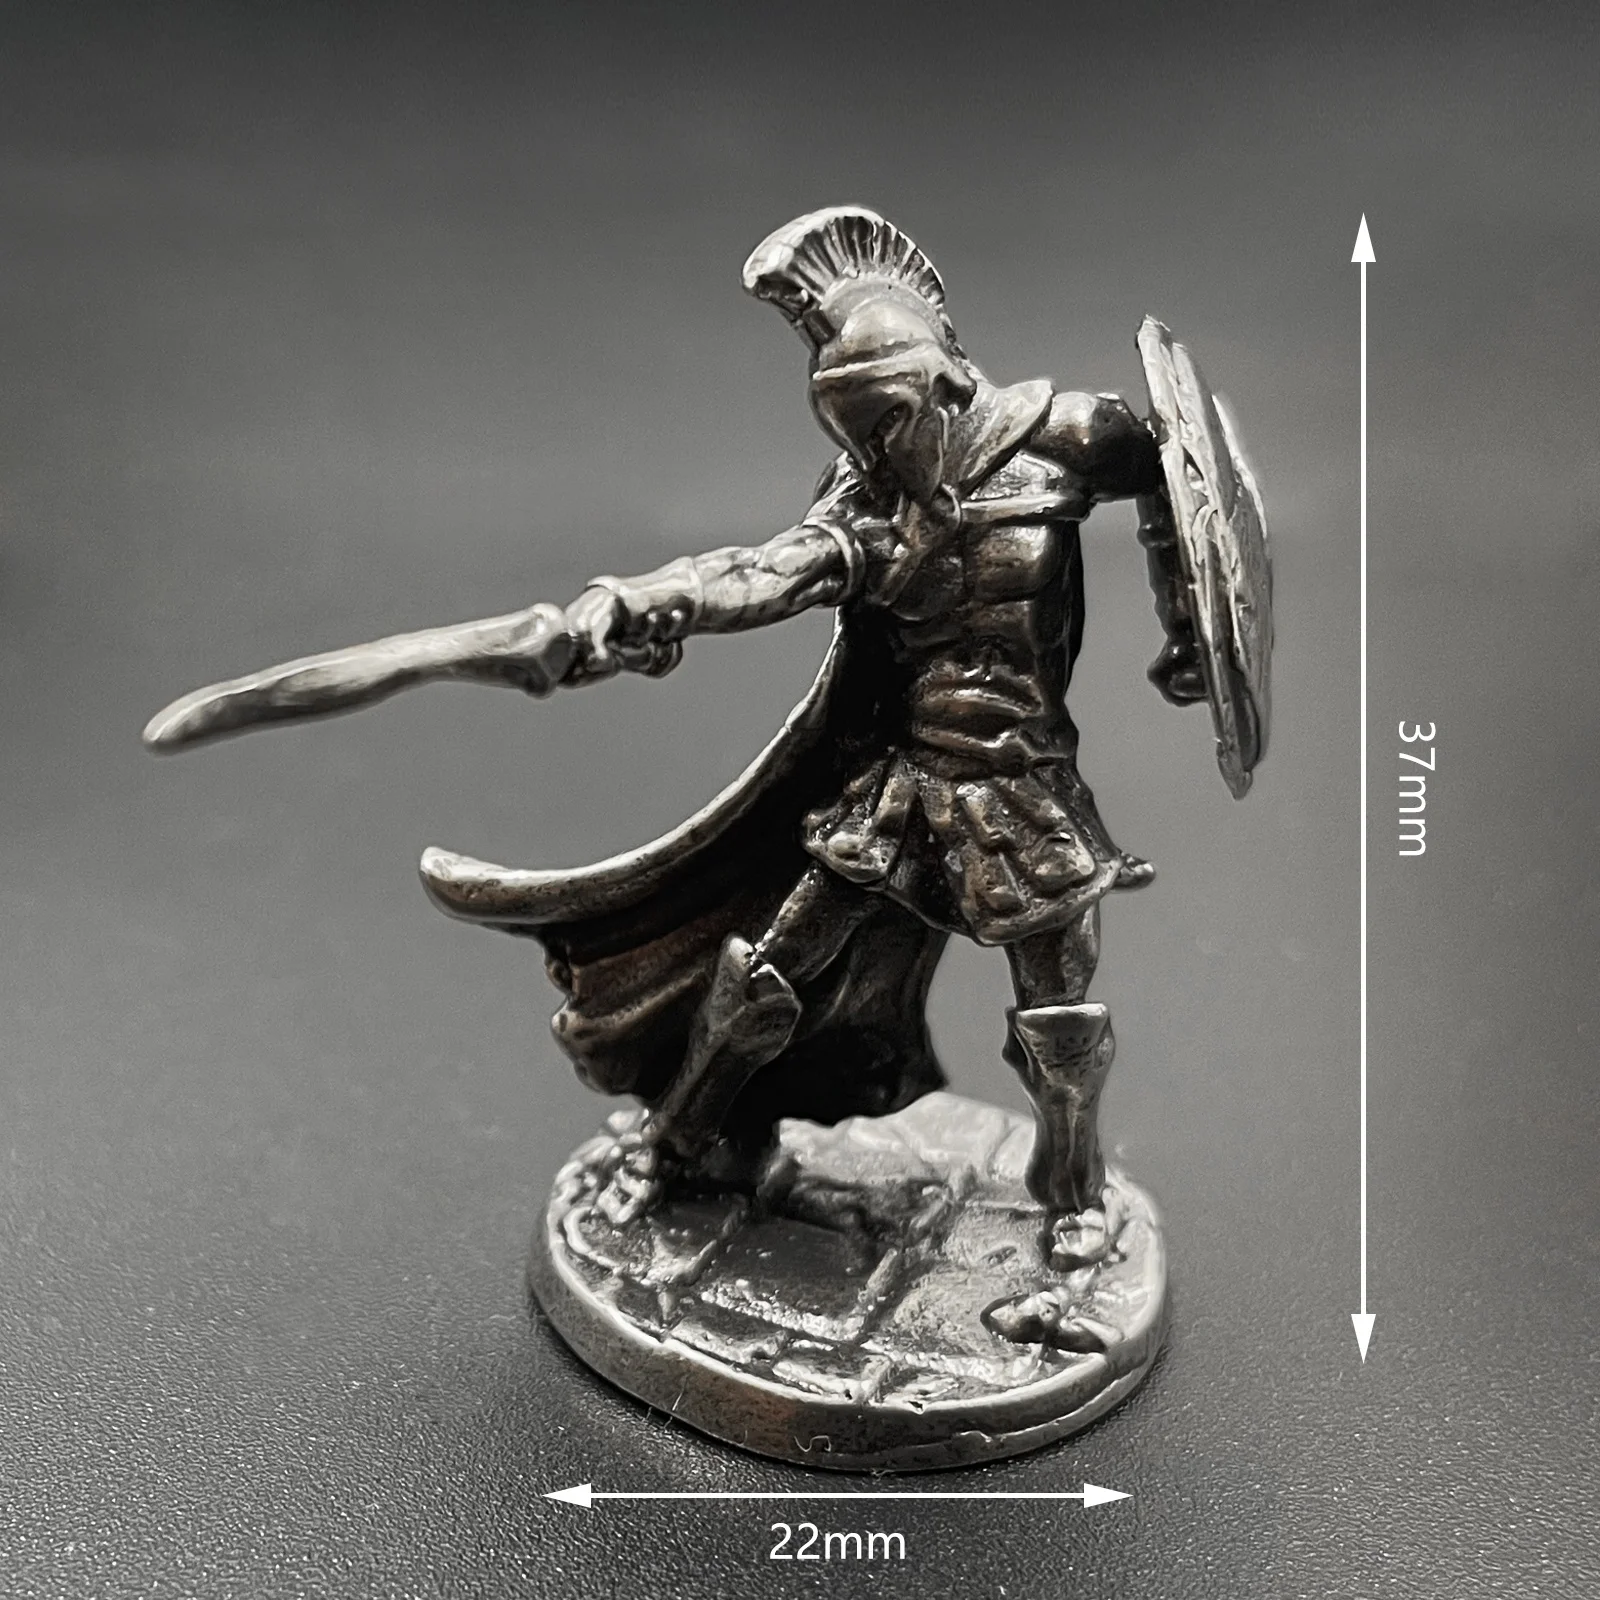 1pcs Ancient Spartan Rome Soliders Figurines Miniatures Vintage Metal Soldiers Model Statue Desktop Ornament Gift miniature eagle figurines